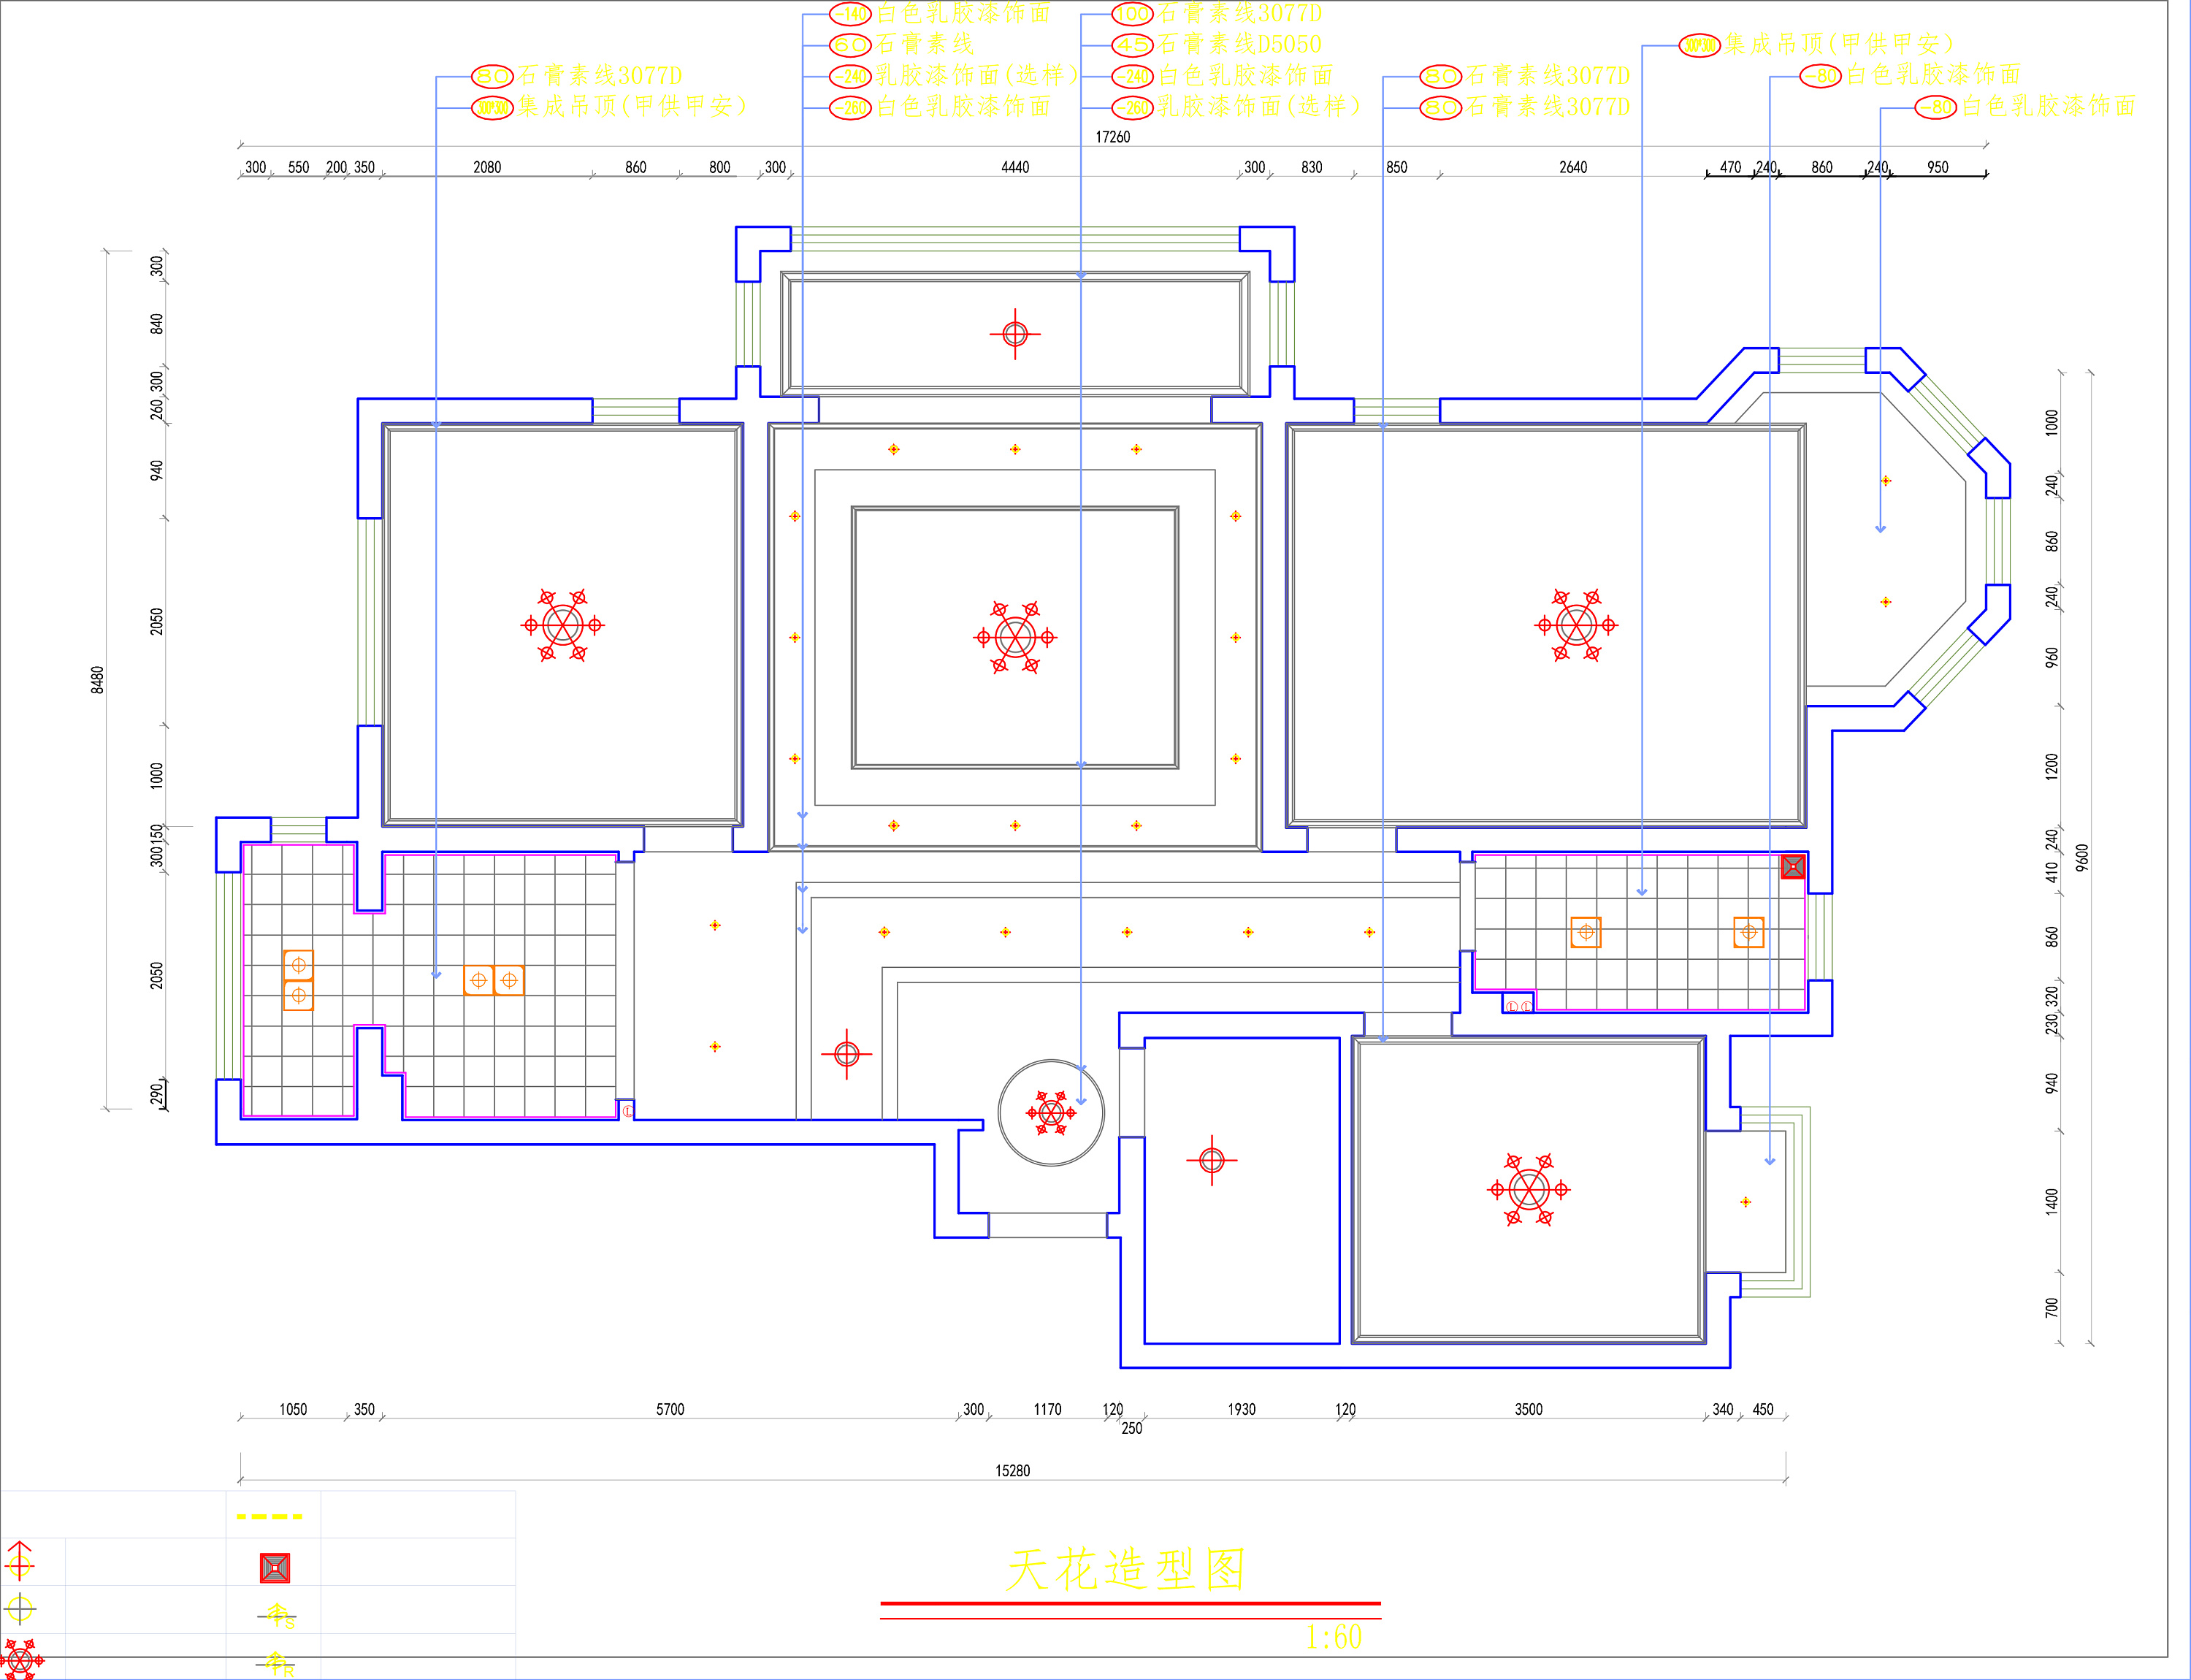 Sketchup + Layout 室内设计施工图---工作流 - 知乎